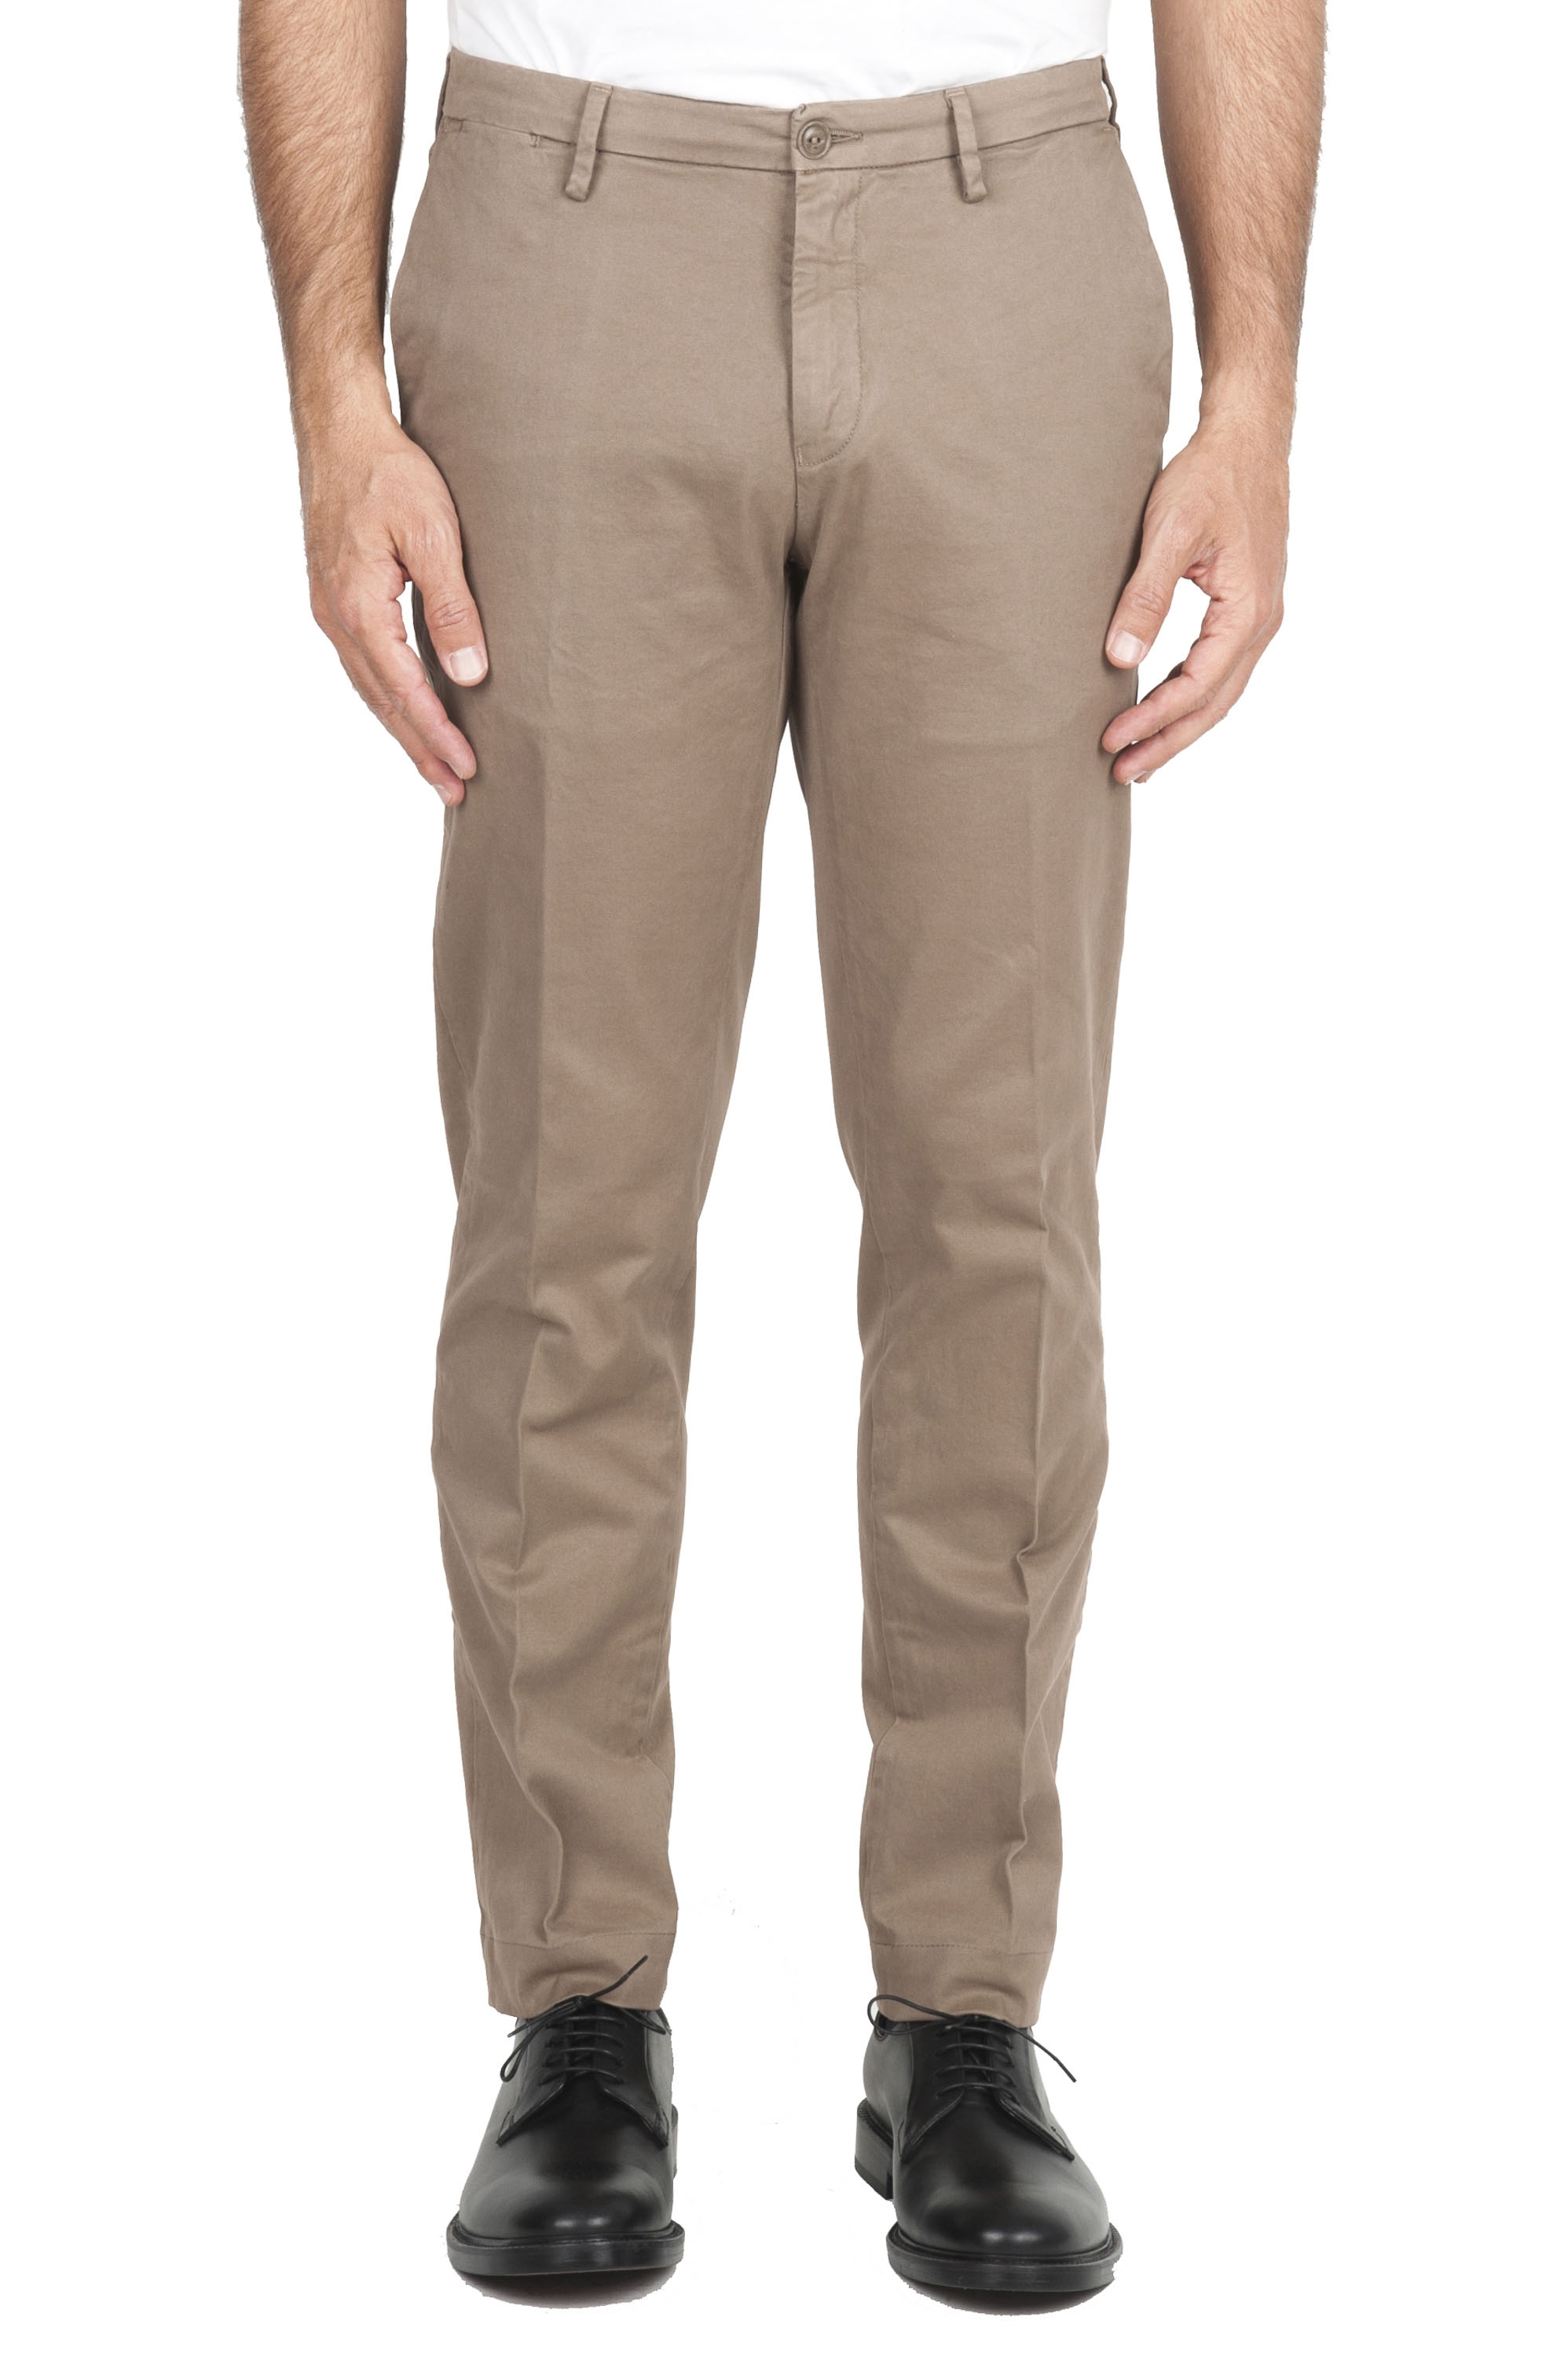 SBU 01534 Classic chino pants in beige stretch cotton 01